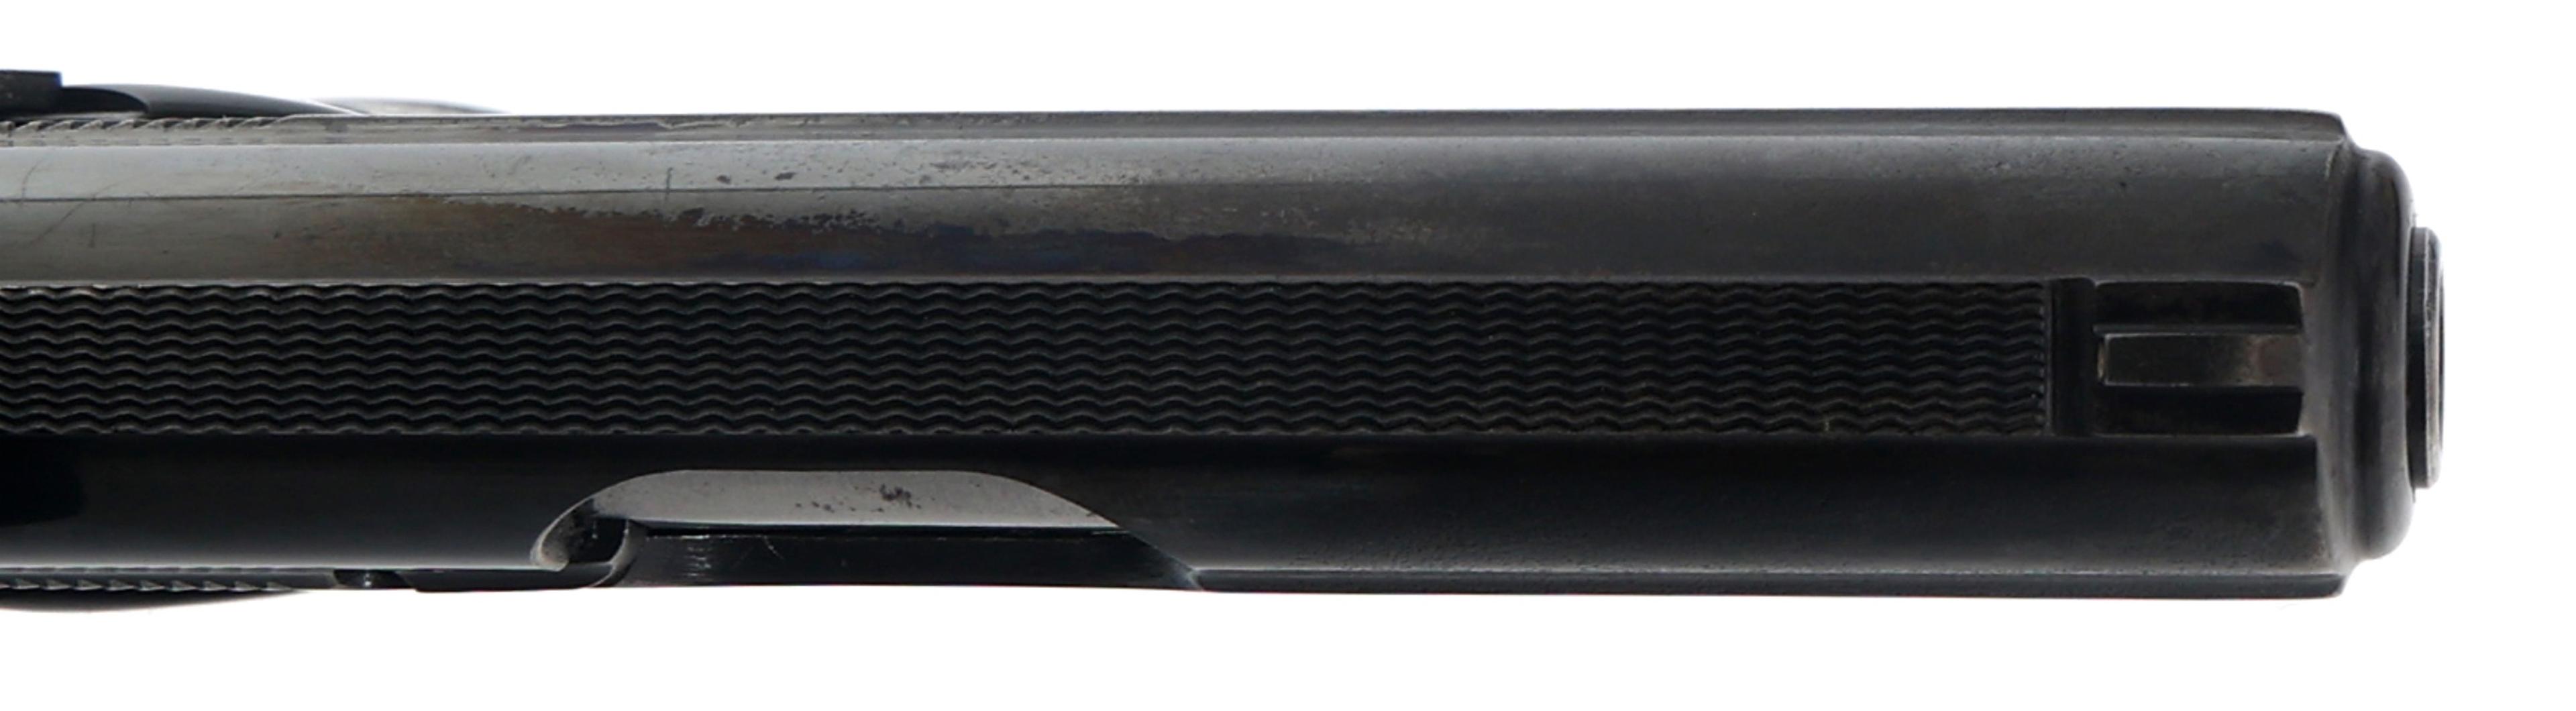 WALTHER MODEL PPK/S 7.65mm CALIBER PISTOL